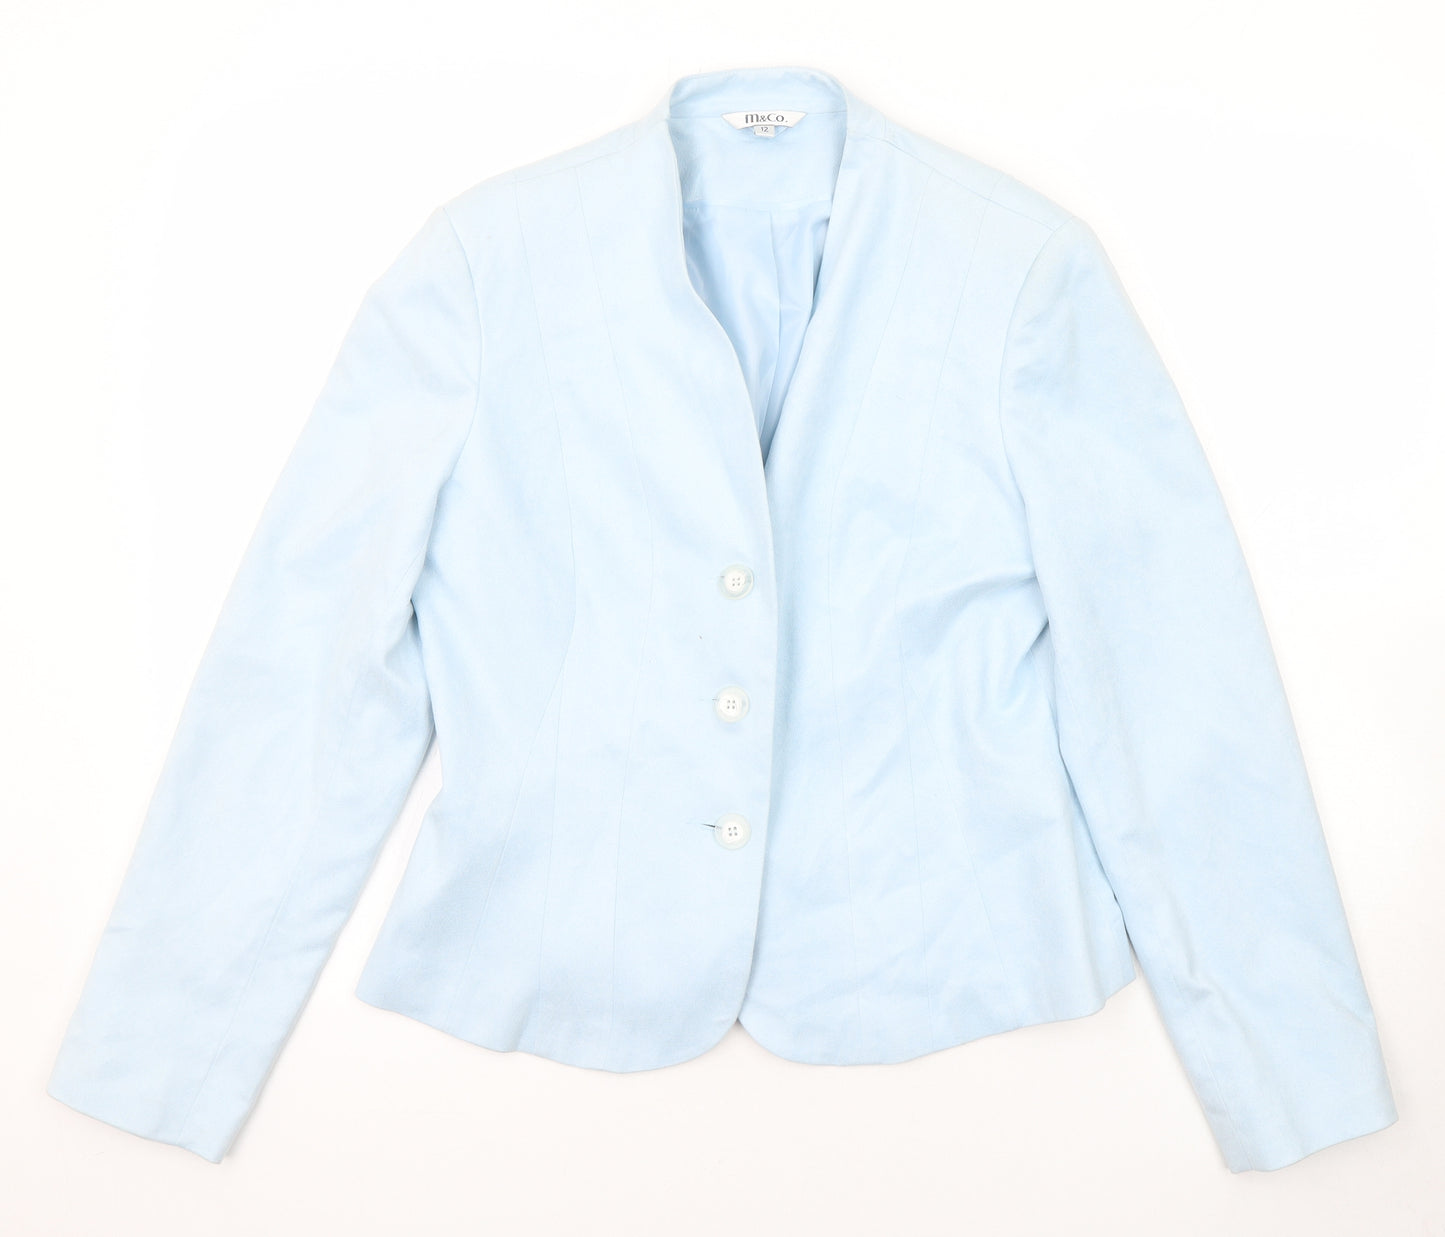 M&Co Womens Blue Jacket Blazer Size 12 Button